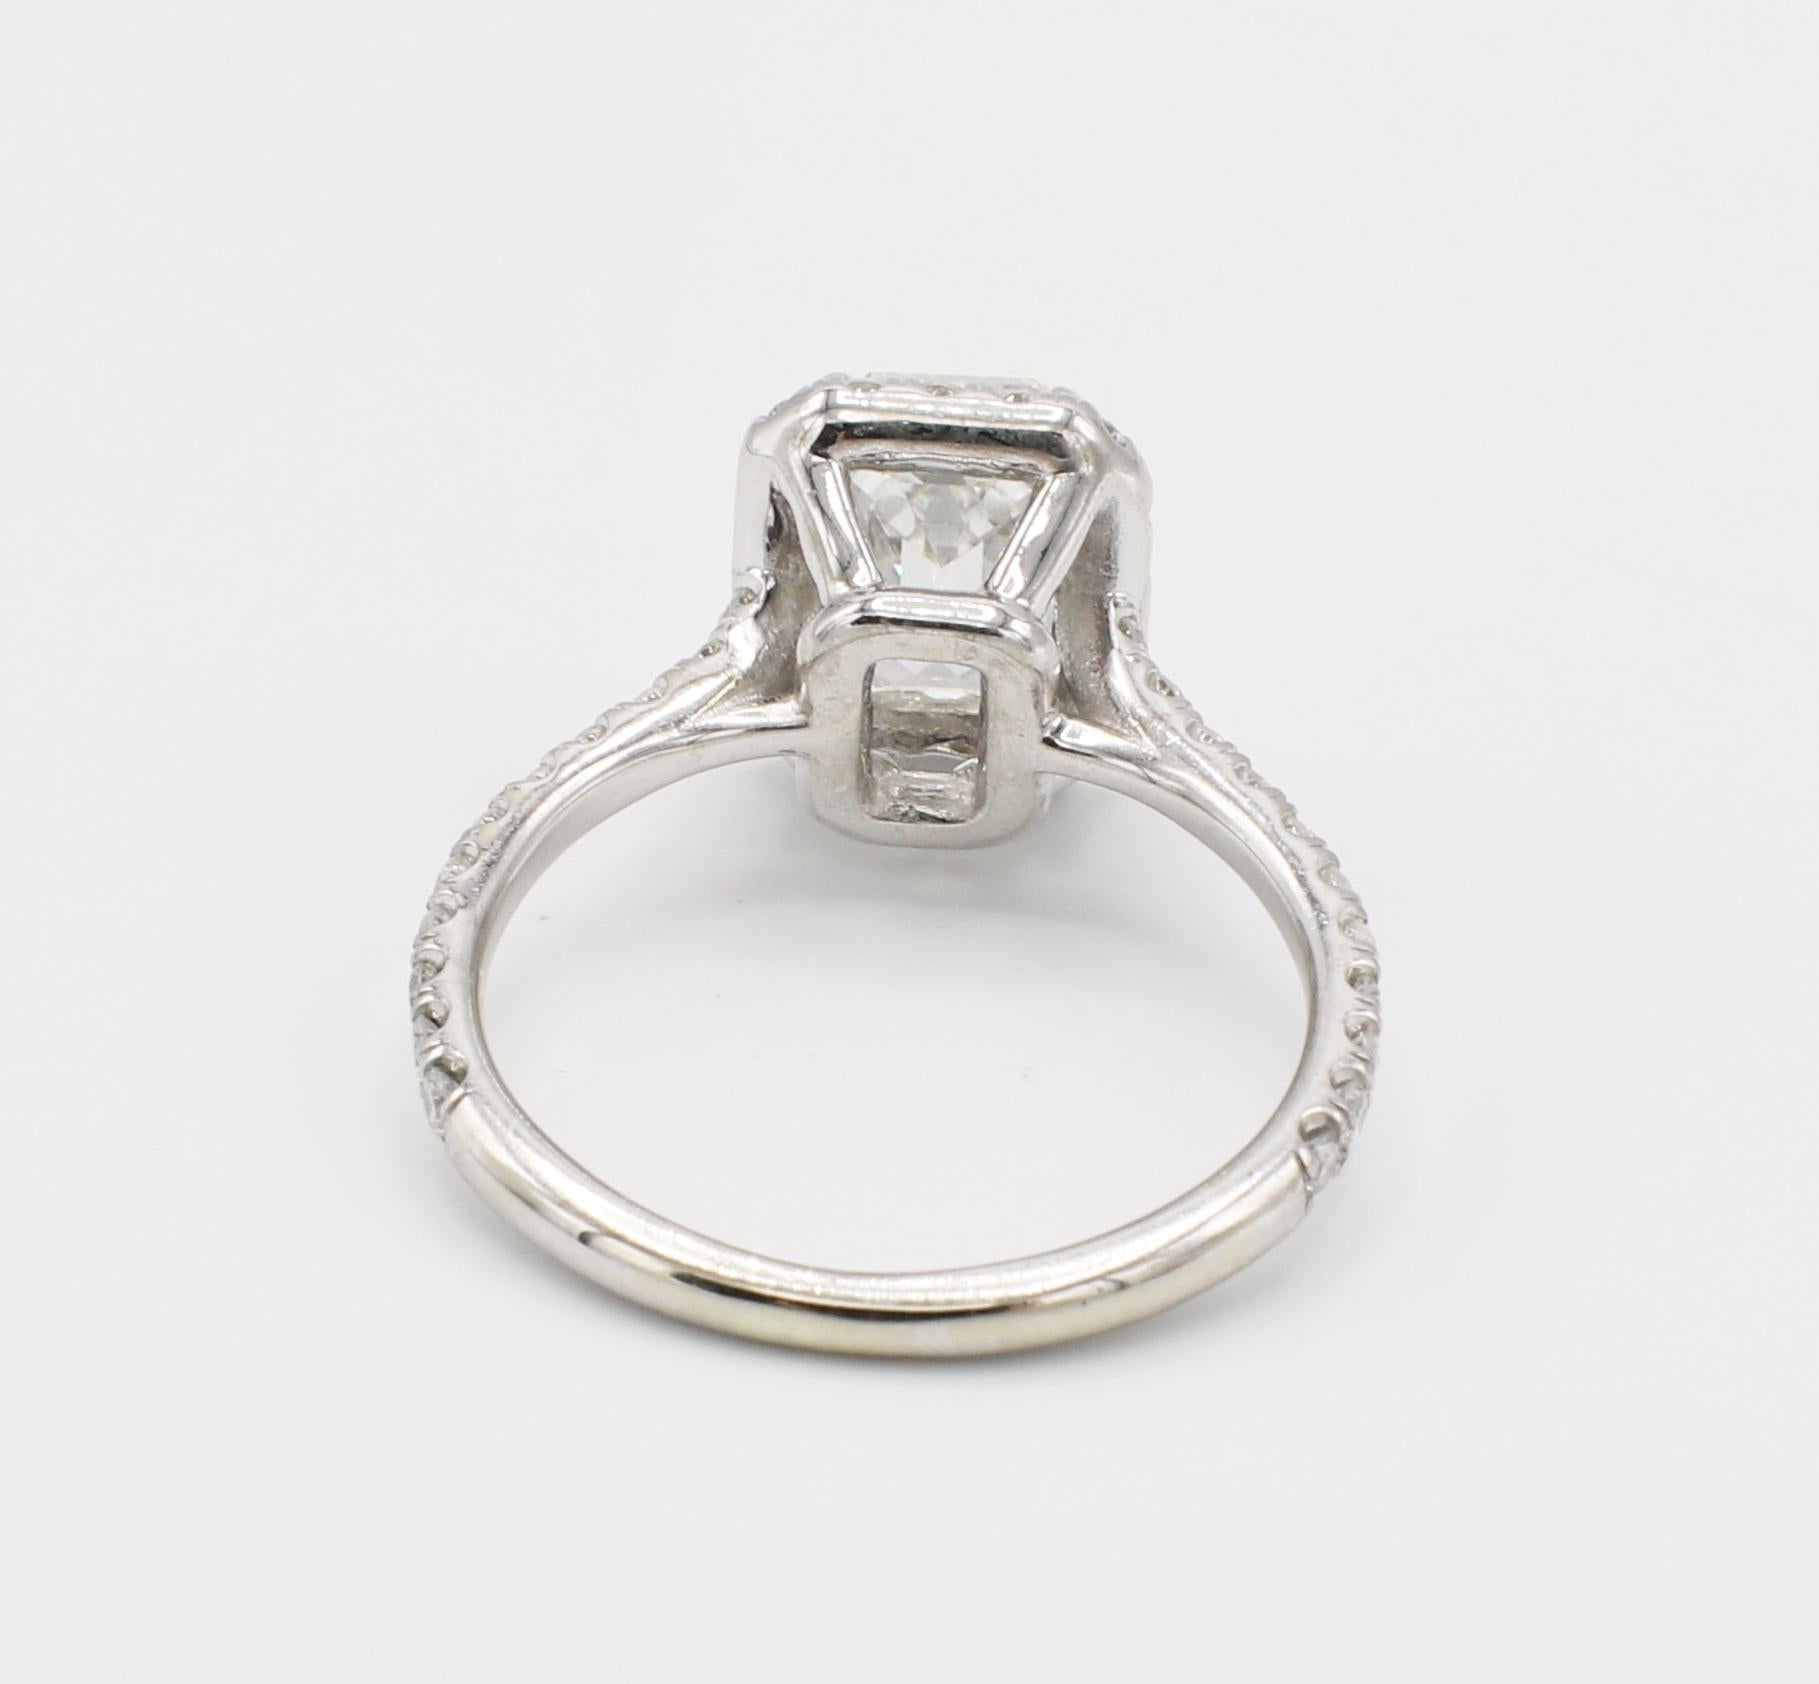 Women's or Men's GIA Certified 1.51 Carat Emerald Cut Diamond Halo Engagement Ring